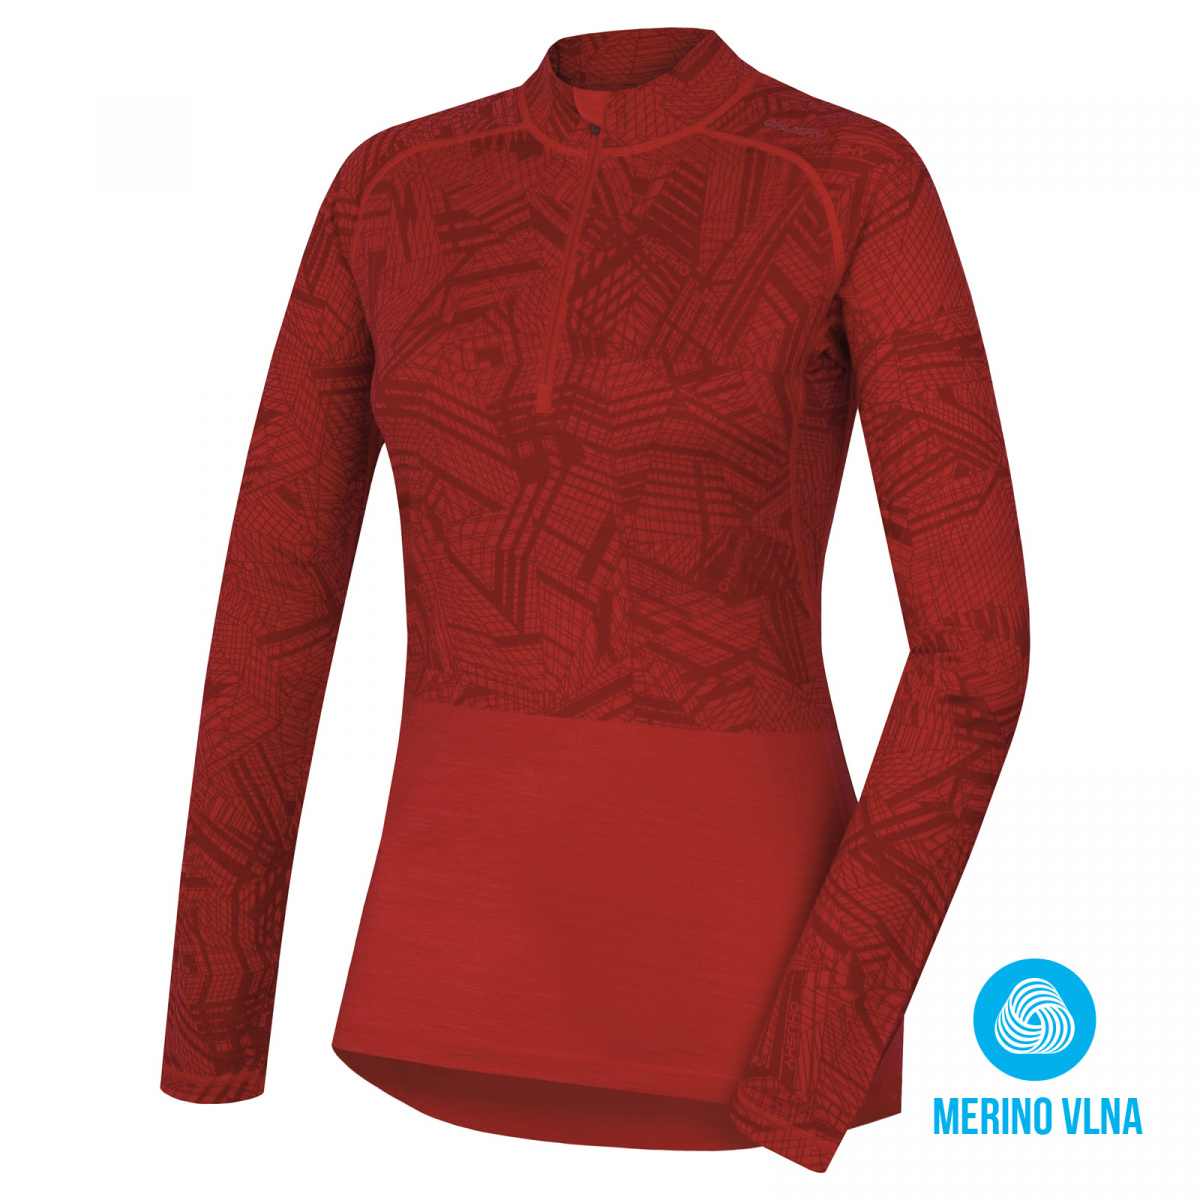 Merino thermal underwear - Women's half-zipper, high-neck top – red